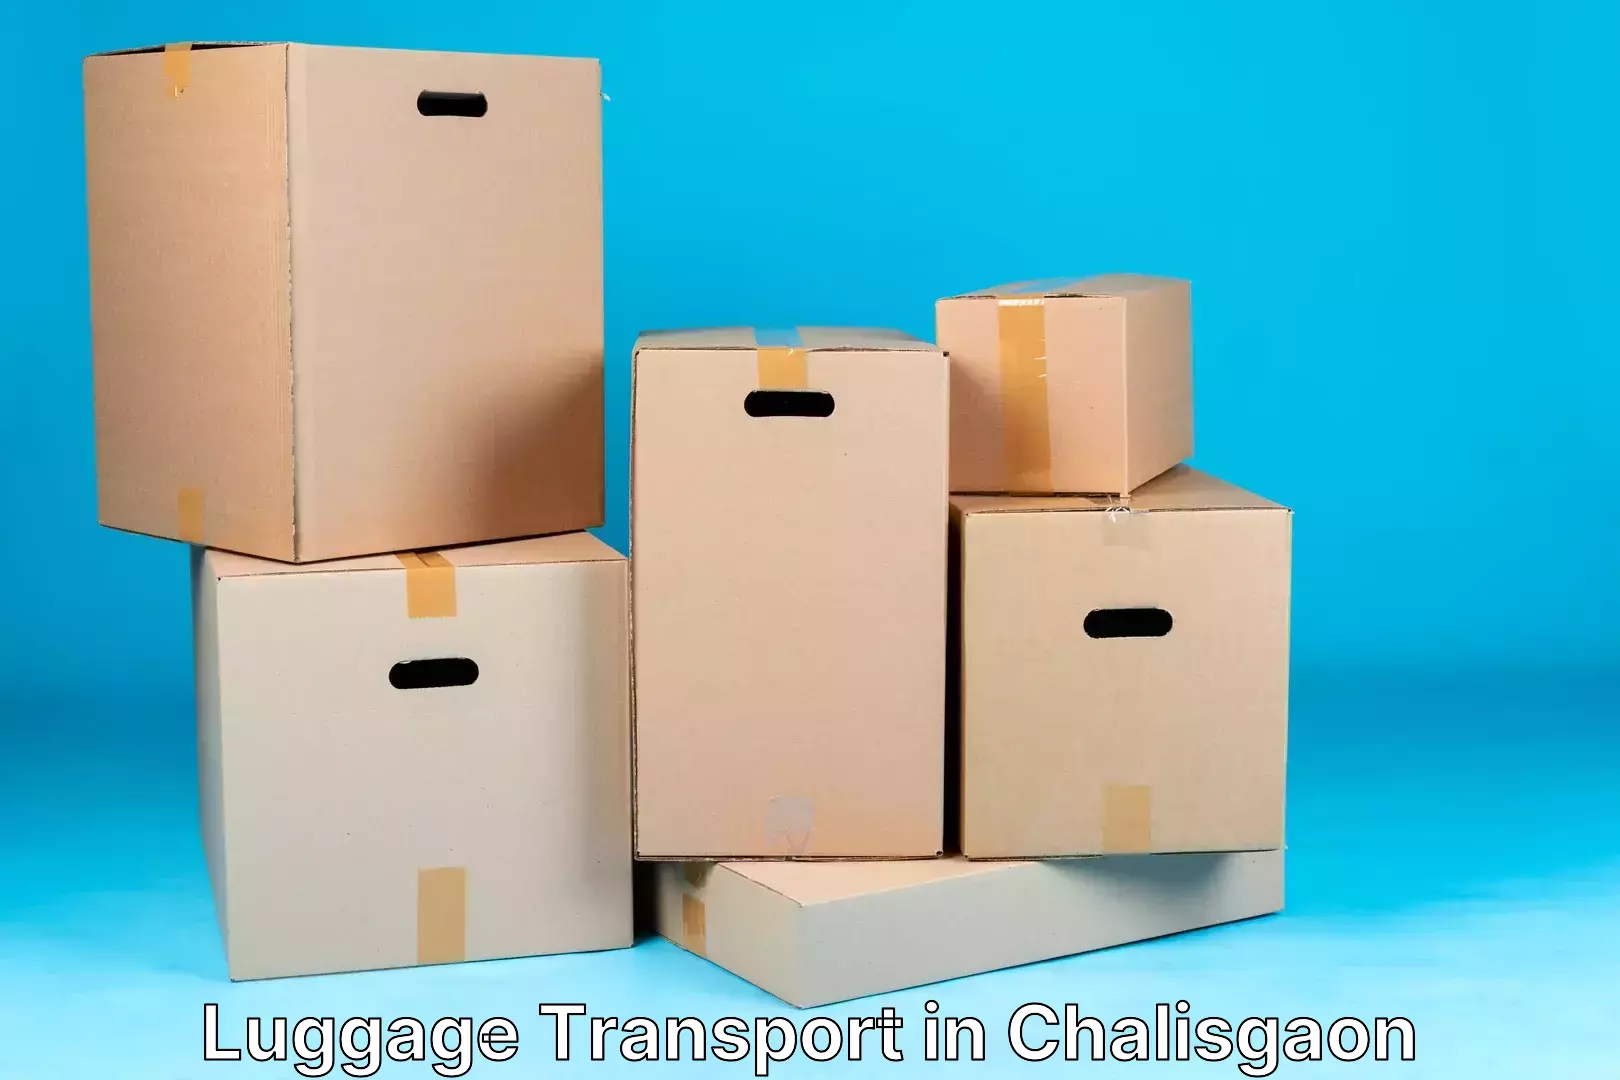 Luggage delivery estimate in Chalisgaon